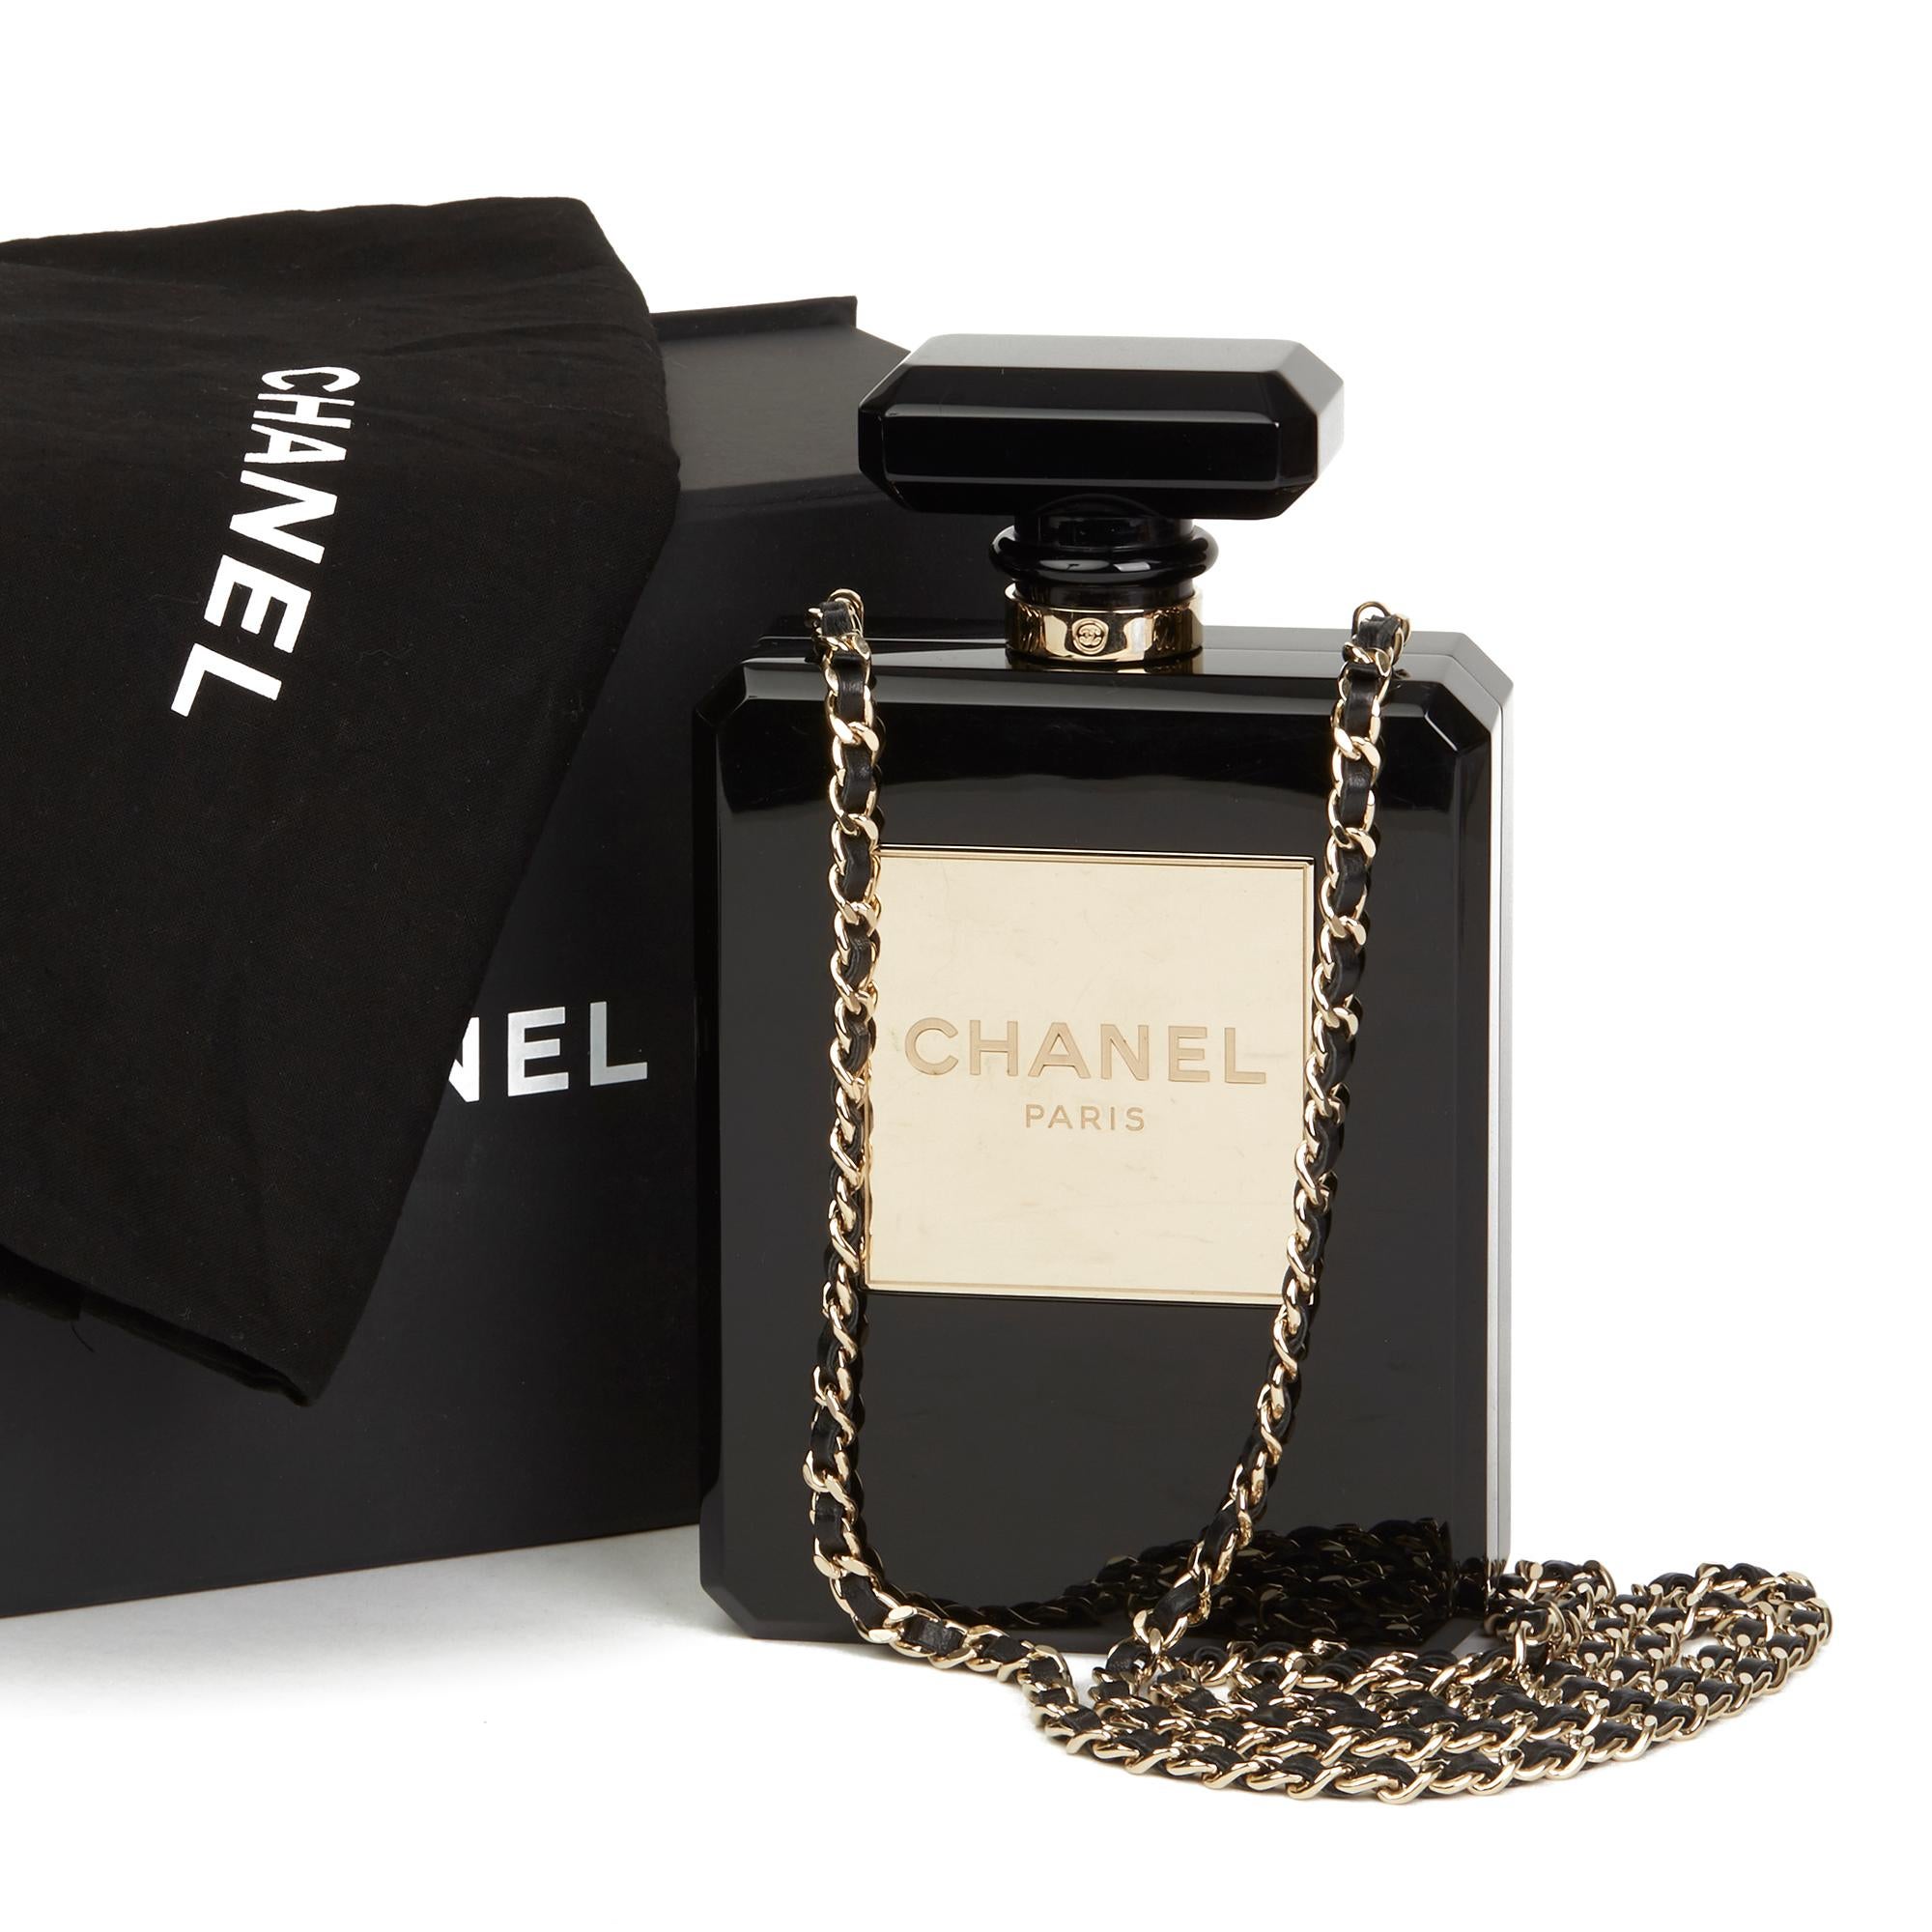 2013 Chanel Black Plexiglass No. 5 Perfume Bottle Bag 4